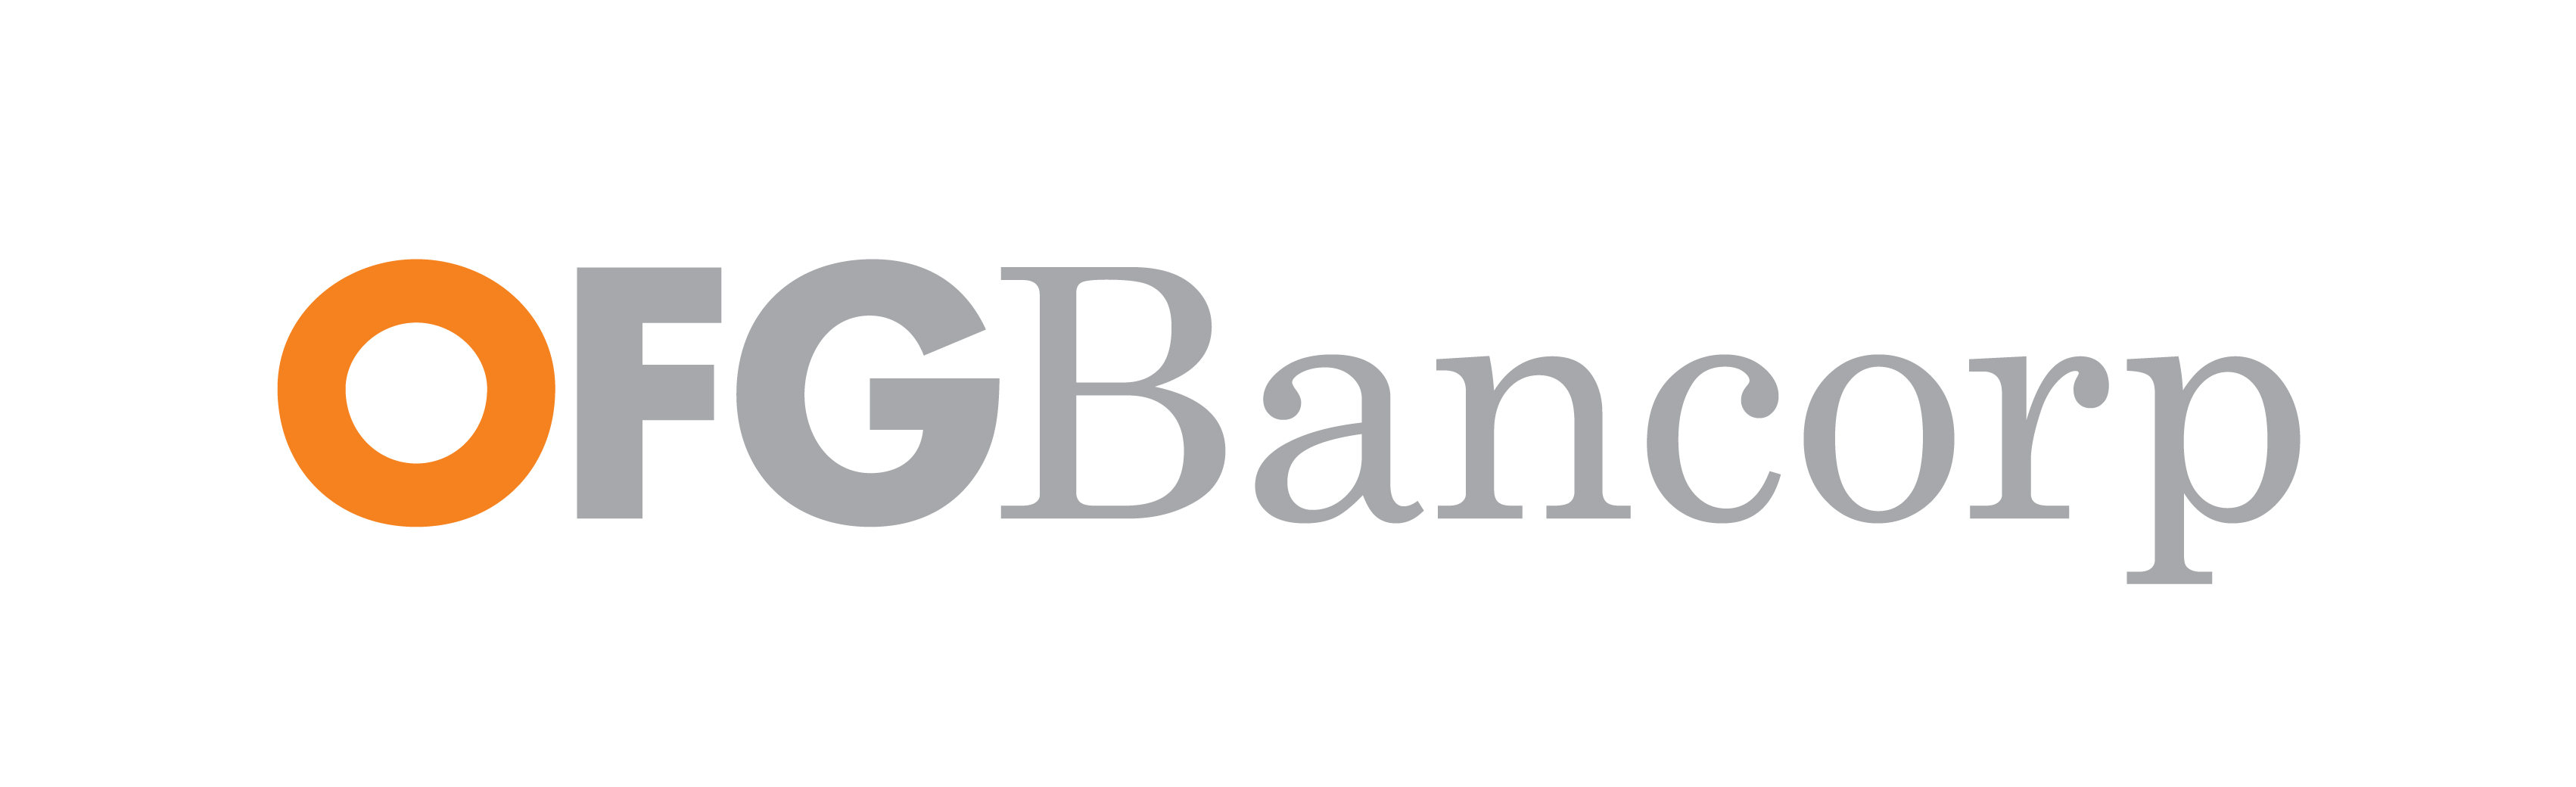 Oriental Financial Group Brand Logo